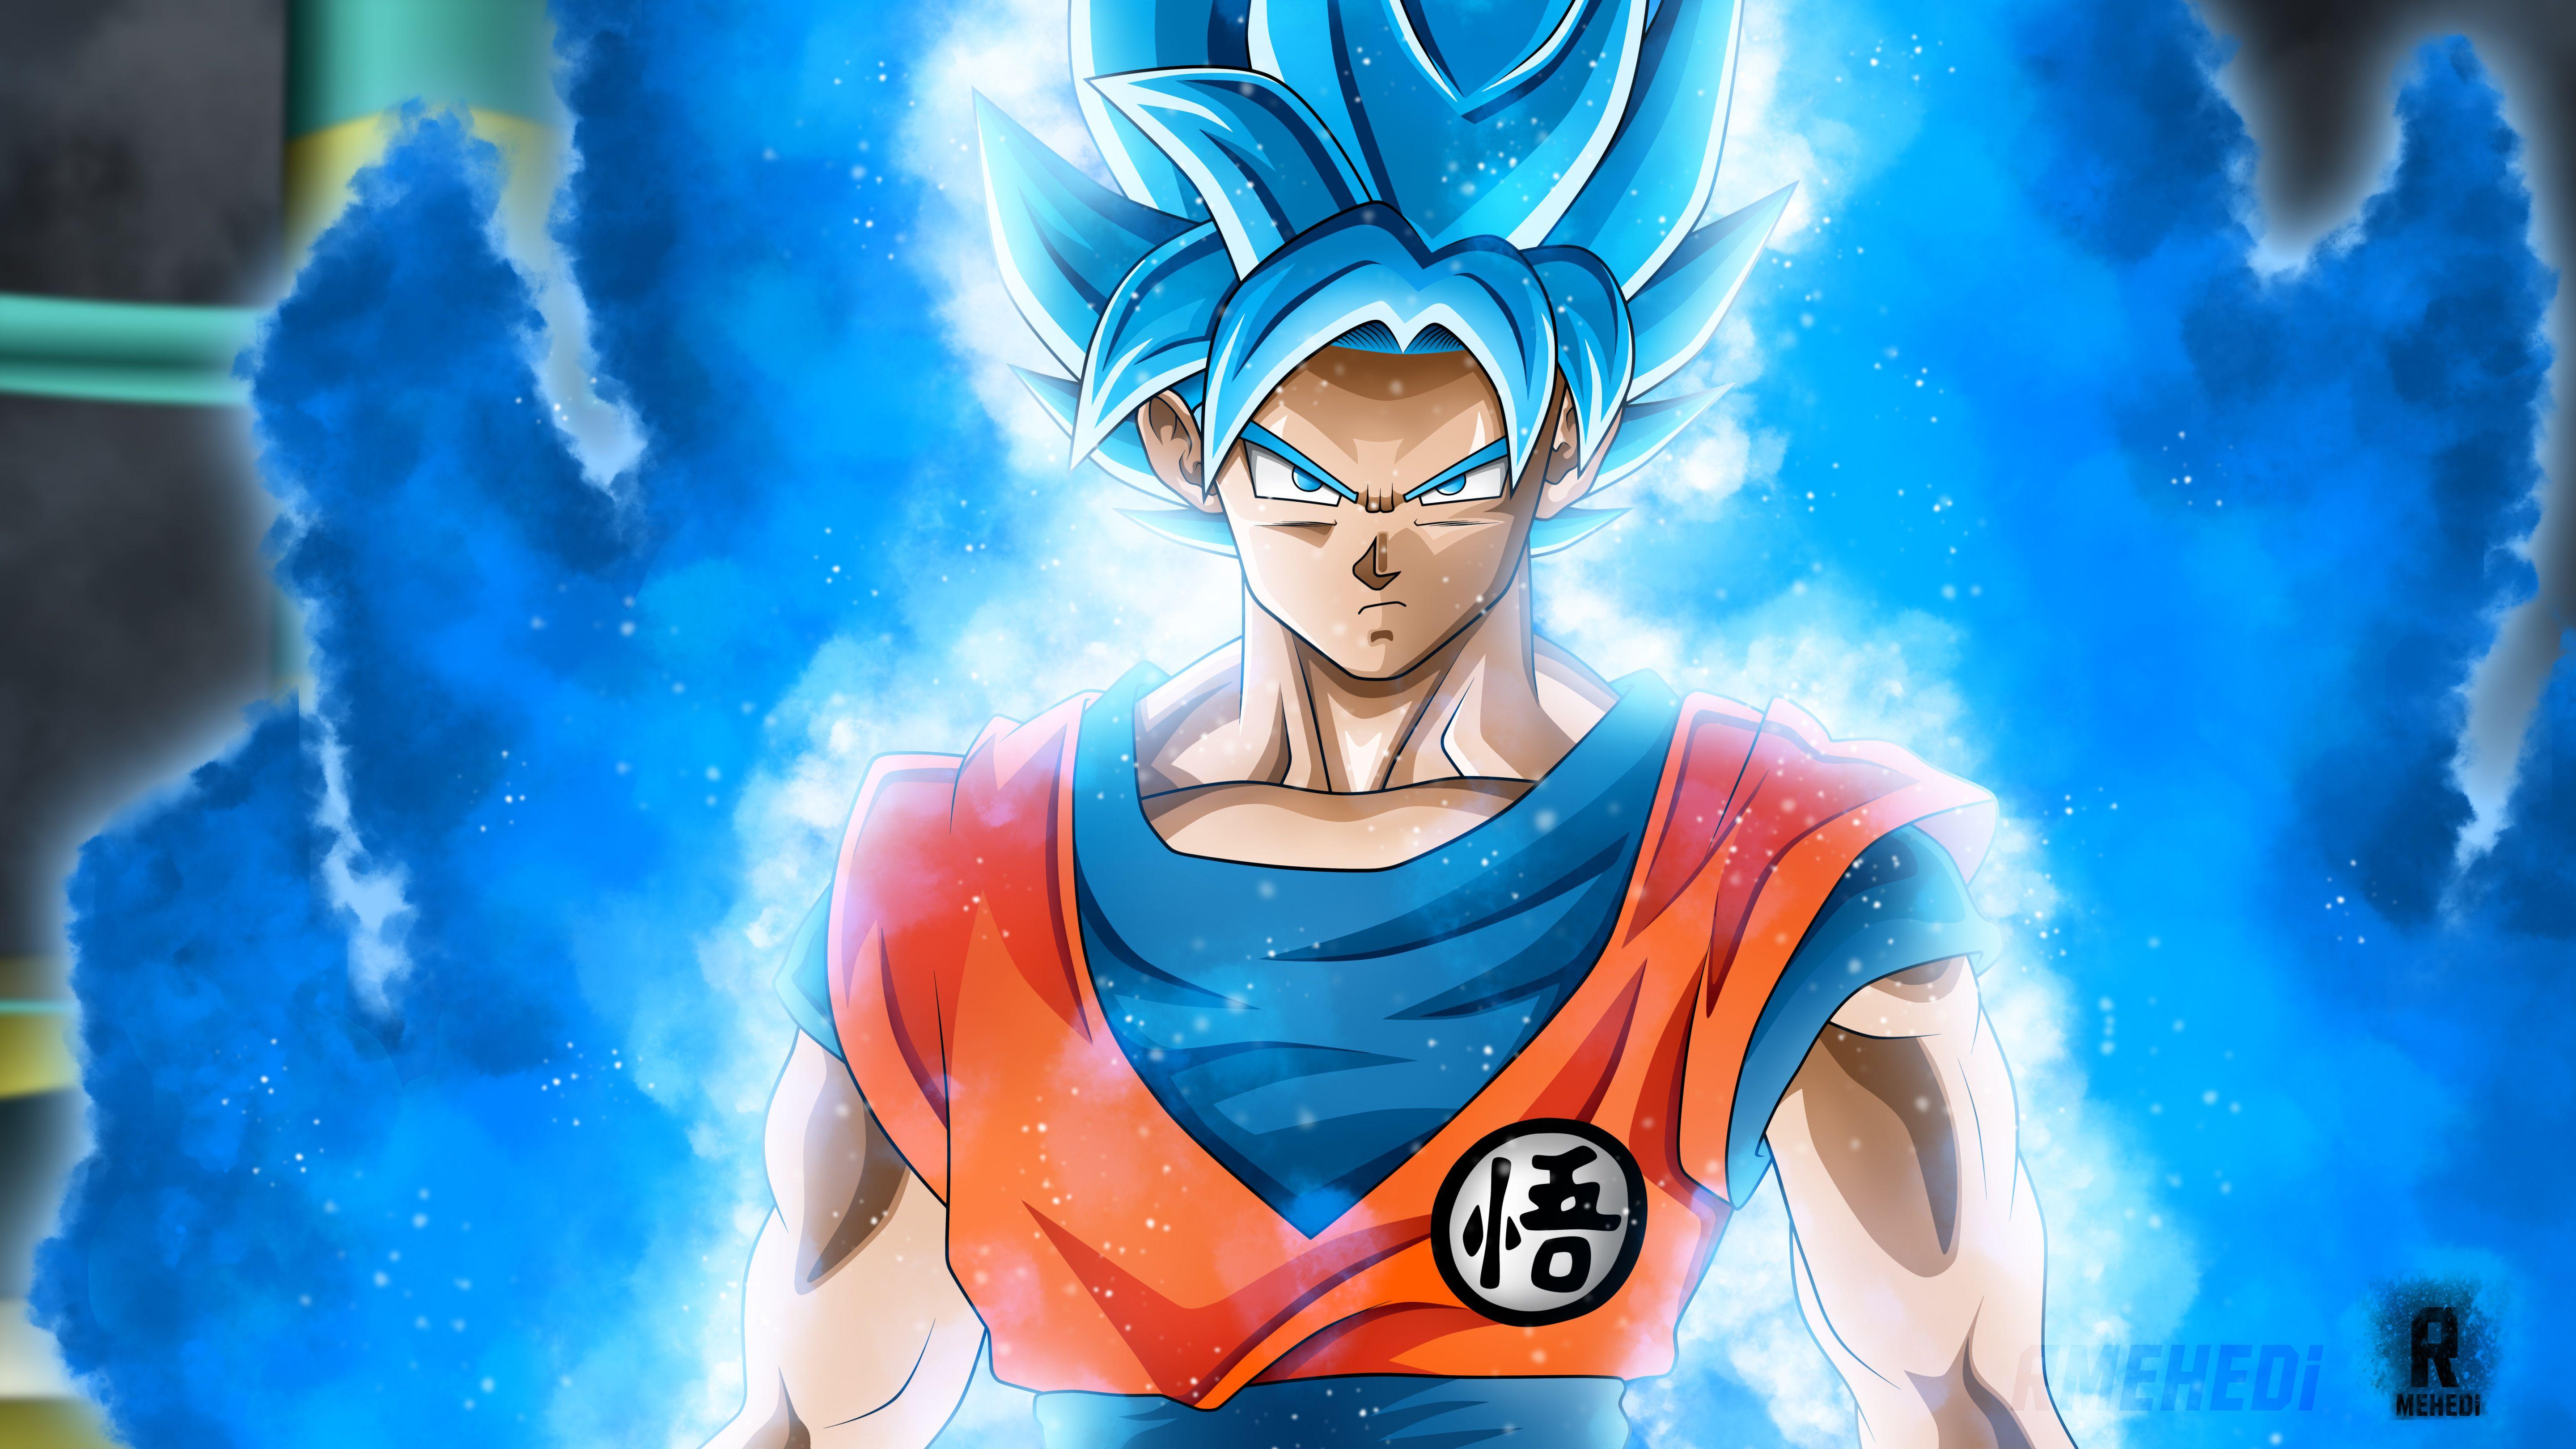 Anime Goku Wallpaper Free Anime Goku Background